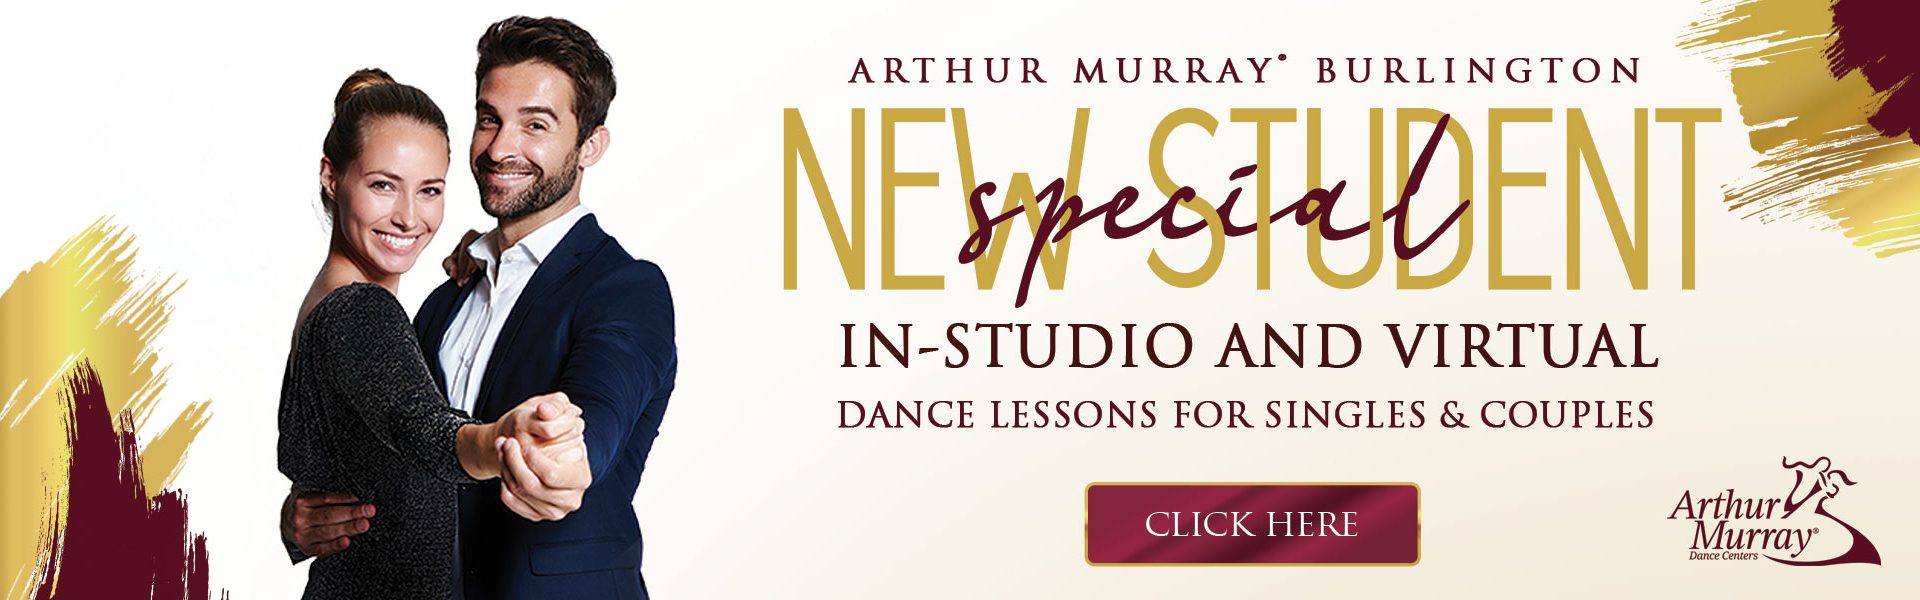 Arthur Murray Burlington New Student Specials